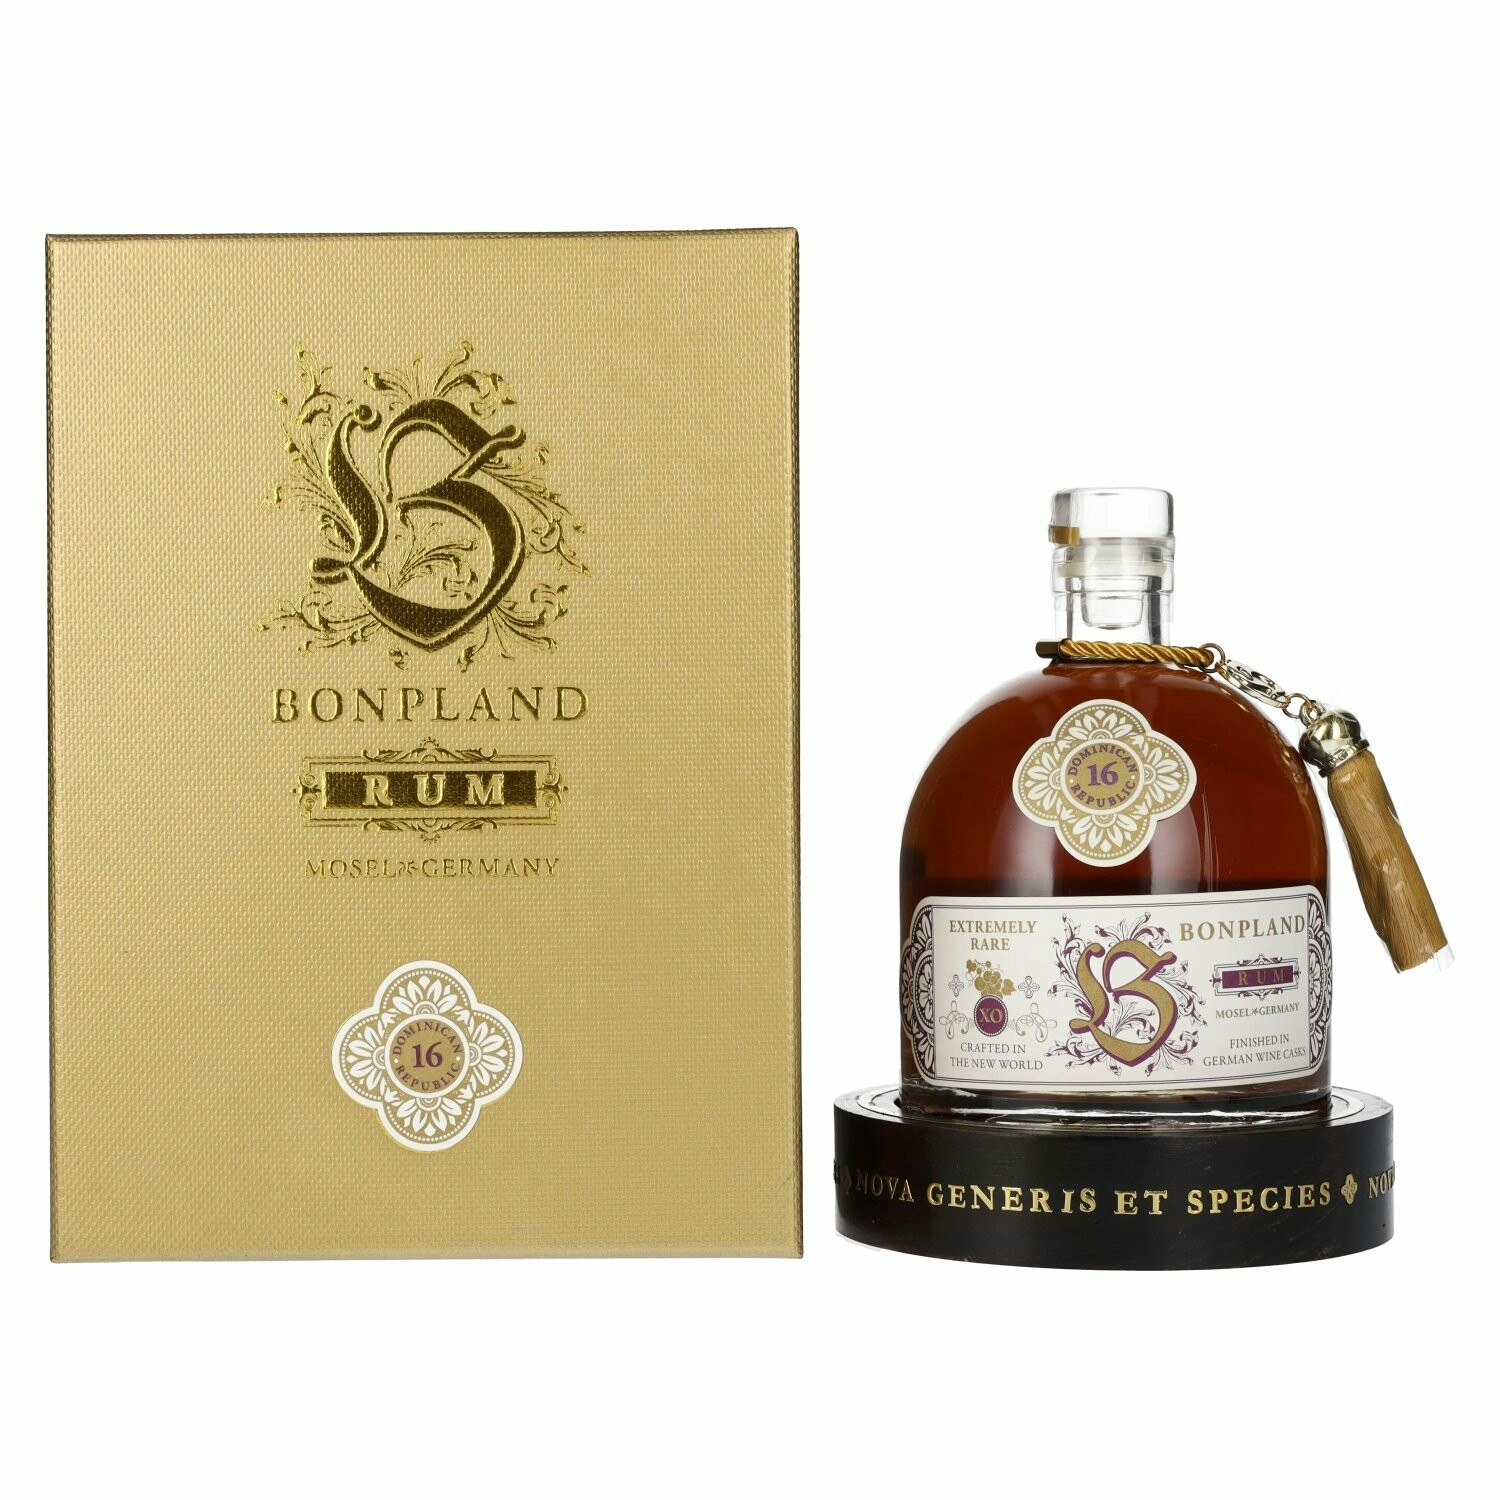 Bonpland Rum Dominican Republic 16 Years Old 45% Vol. 0,5l in Giftbox